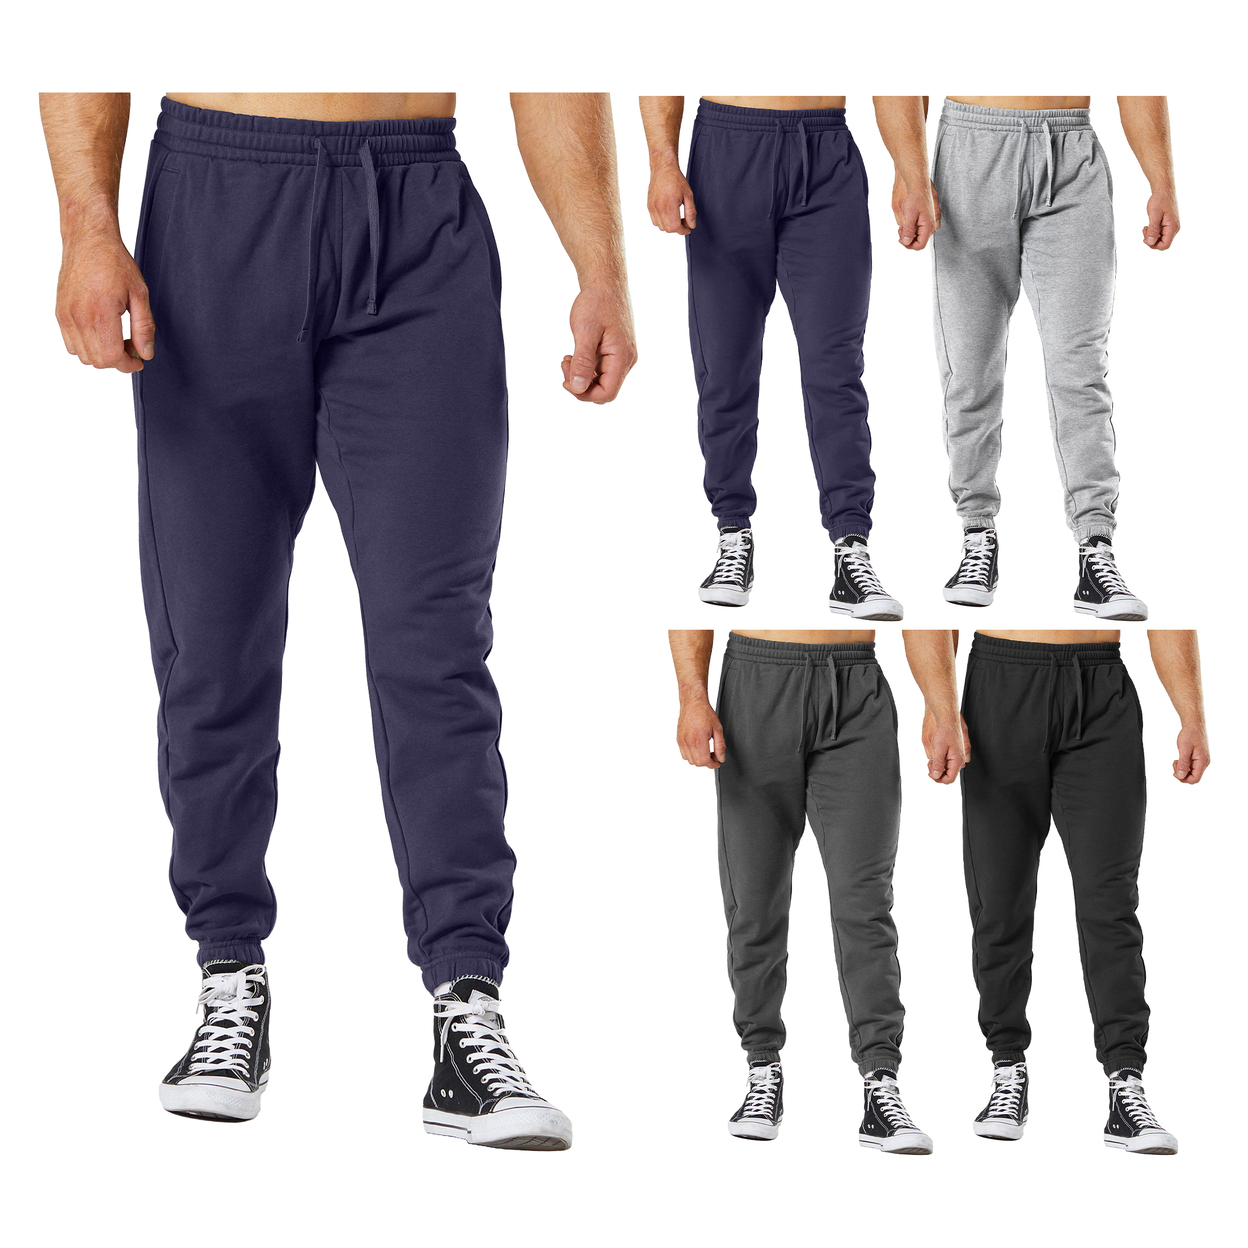 Men's Ultra-Soft Cozy Winter Warm Casual Fleece Lined Sweatpants Jogger - Navy, X-large